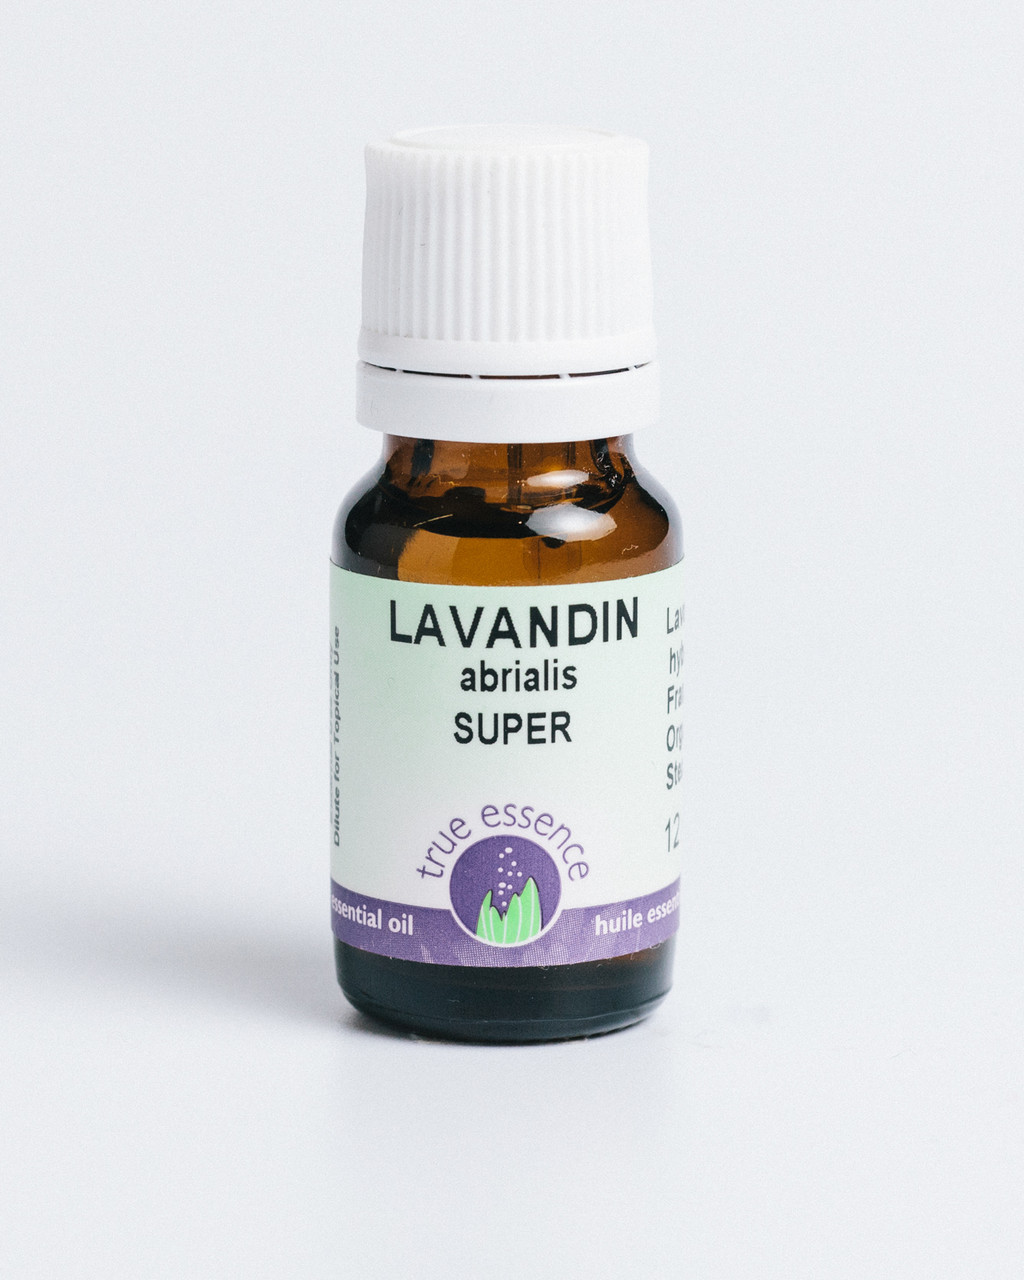 LAVANDIN (Lavandula hybrida abrialis) Organic